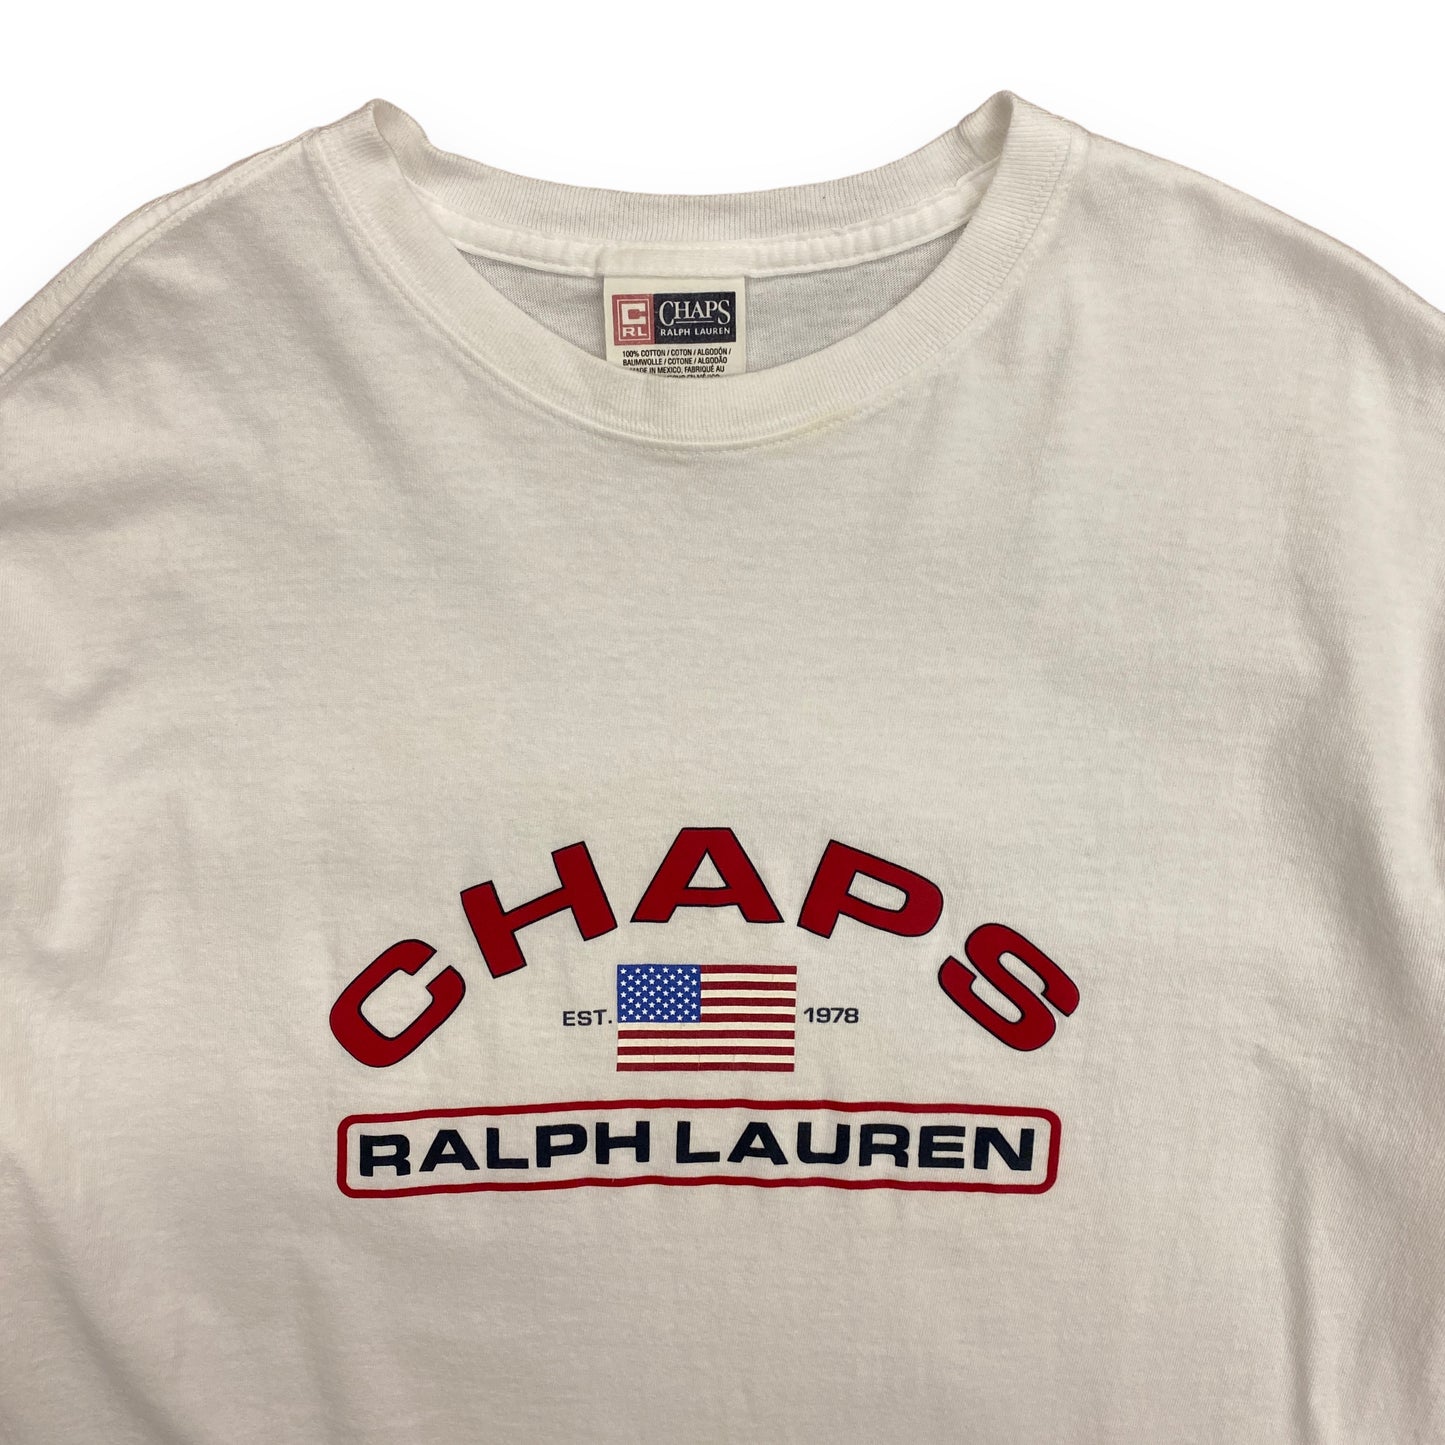 Early 2000s Chaps Ralph Lauren White Logo Tee - Size Medium